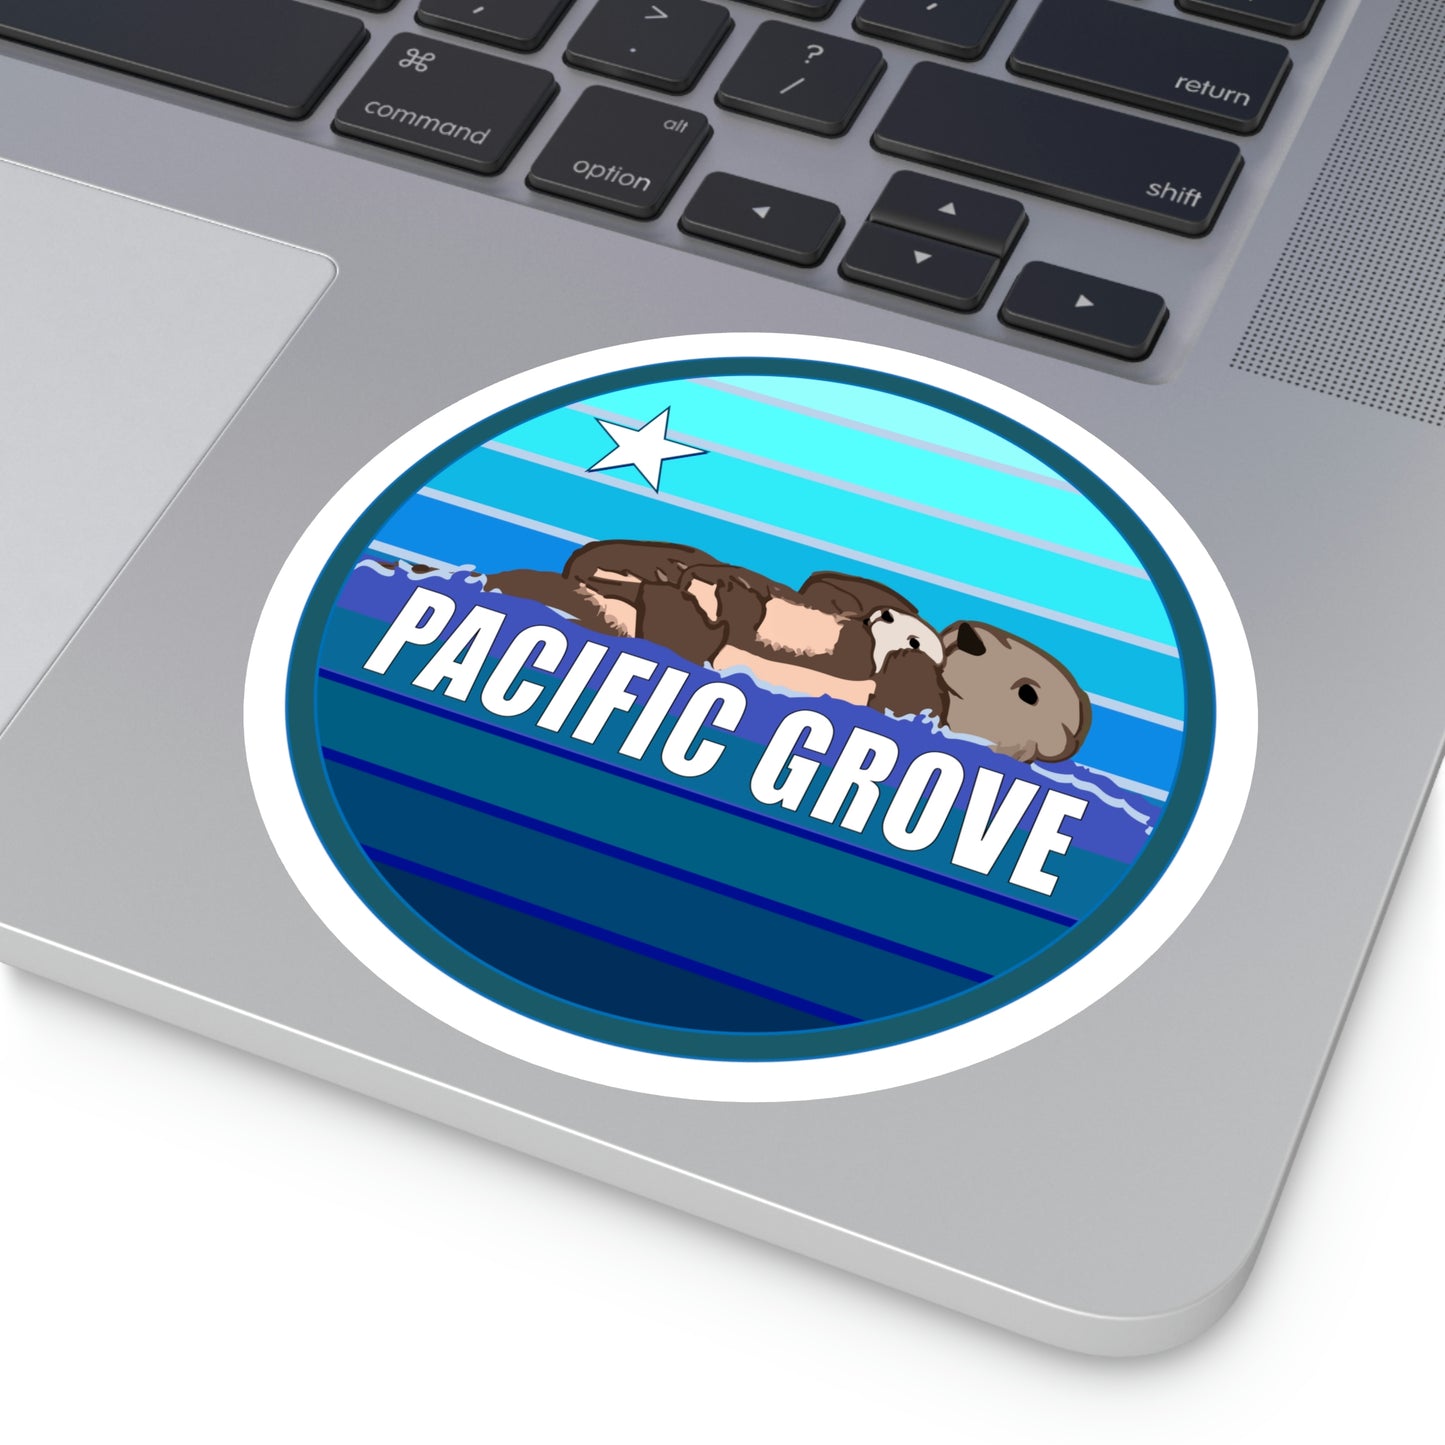 Pacific Grove Sea Otters - Round Sticker, Indoor\Outdoor